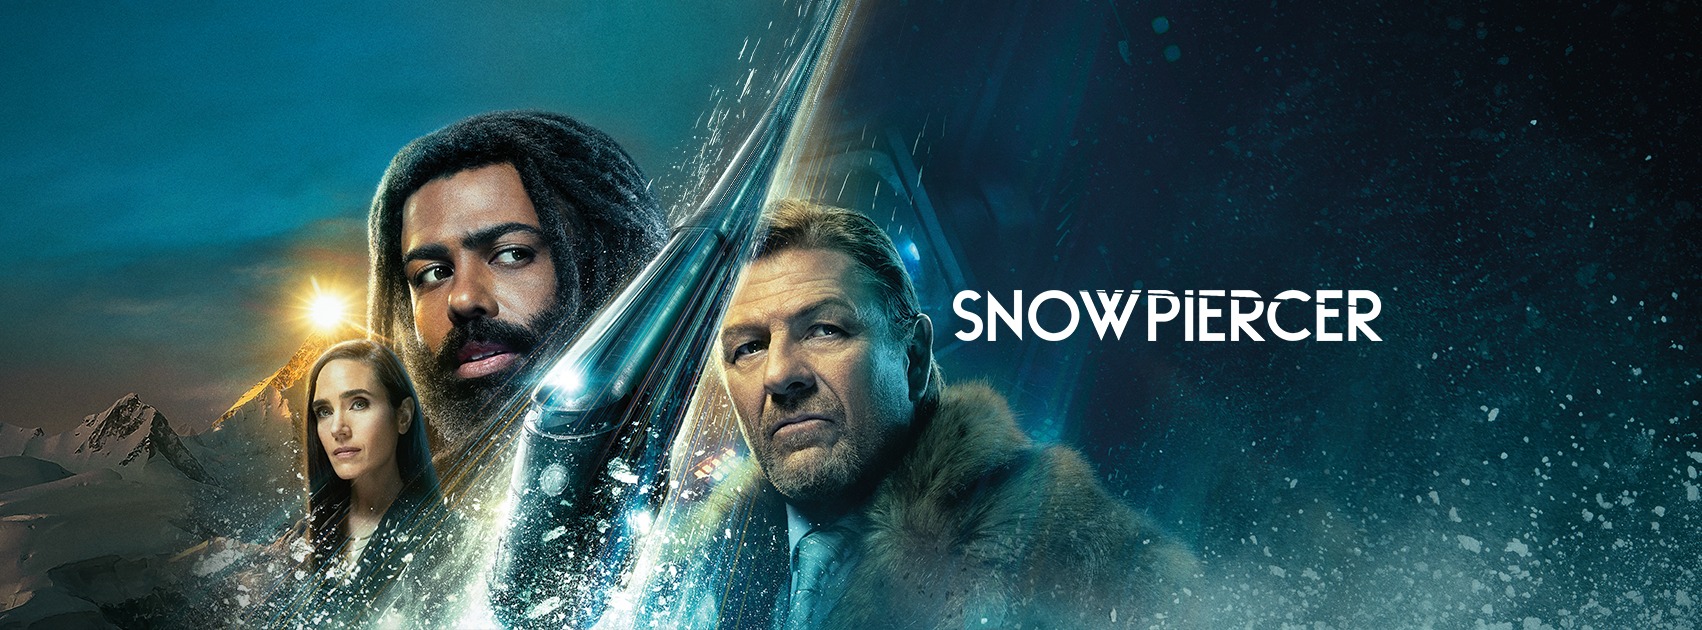 Snowpiercer Trailer: Season 2 Premieres January 25, 2021